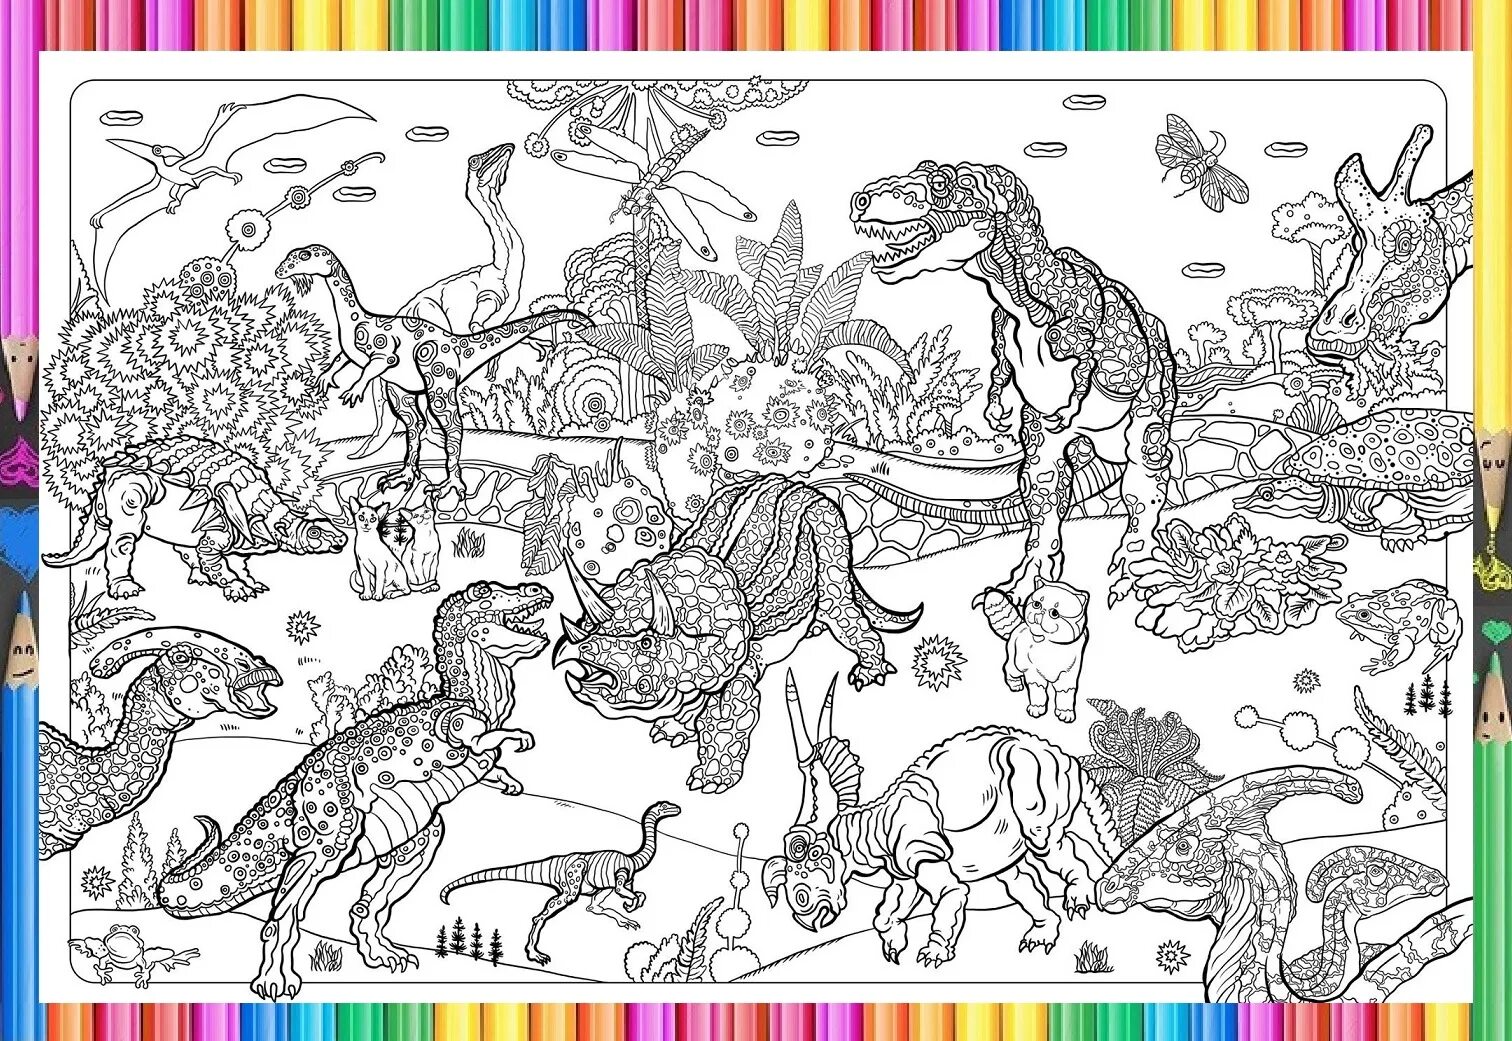 Awesome dinosaur land poster